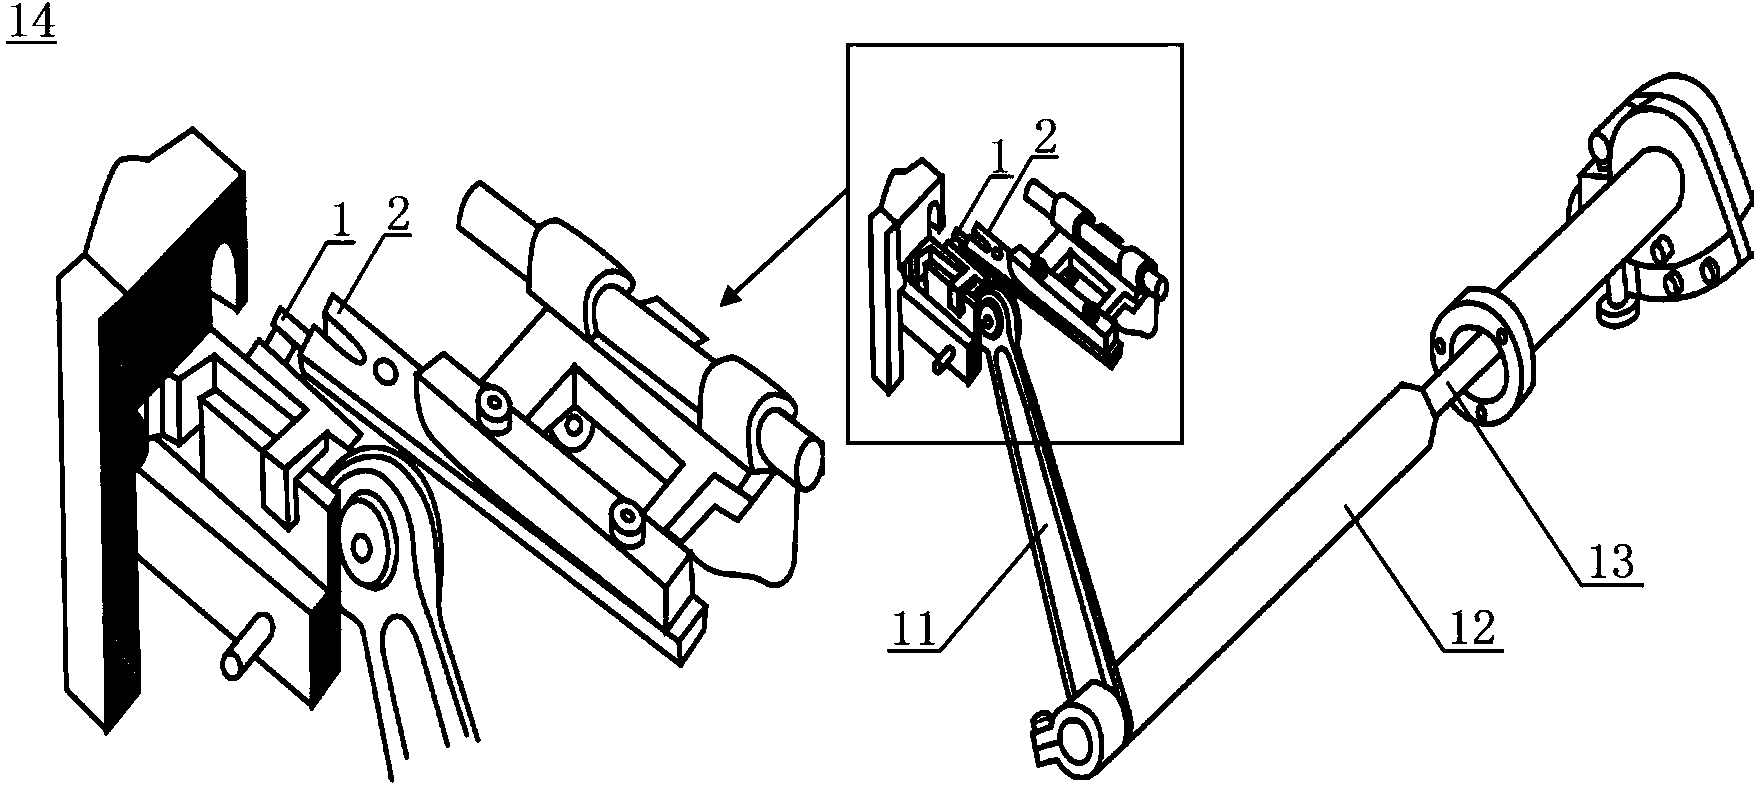 Weft insertion device of latch needle warp knitting machine